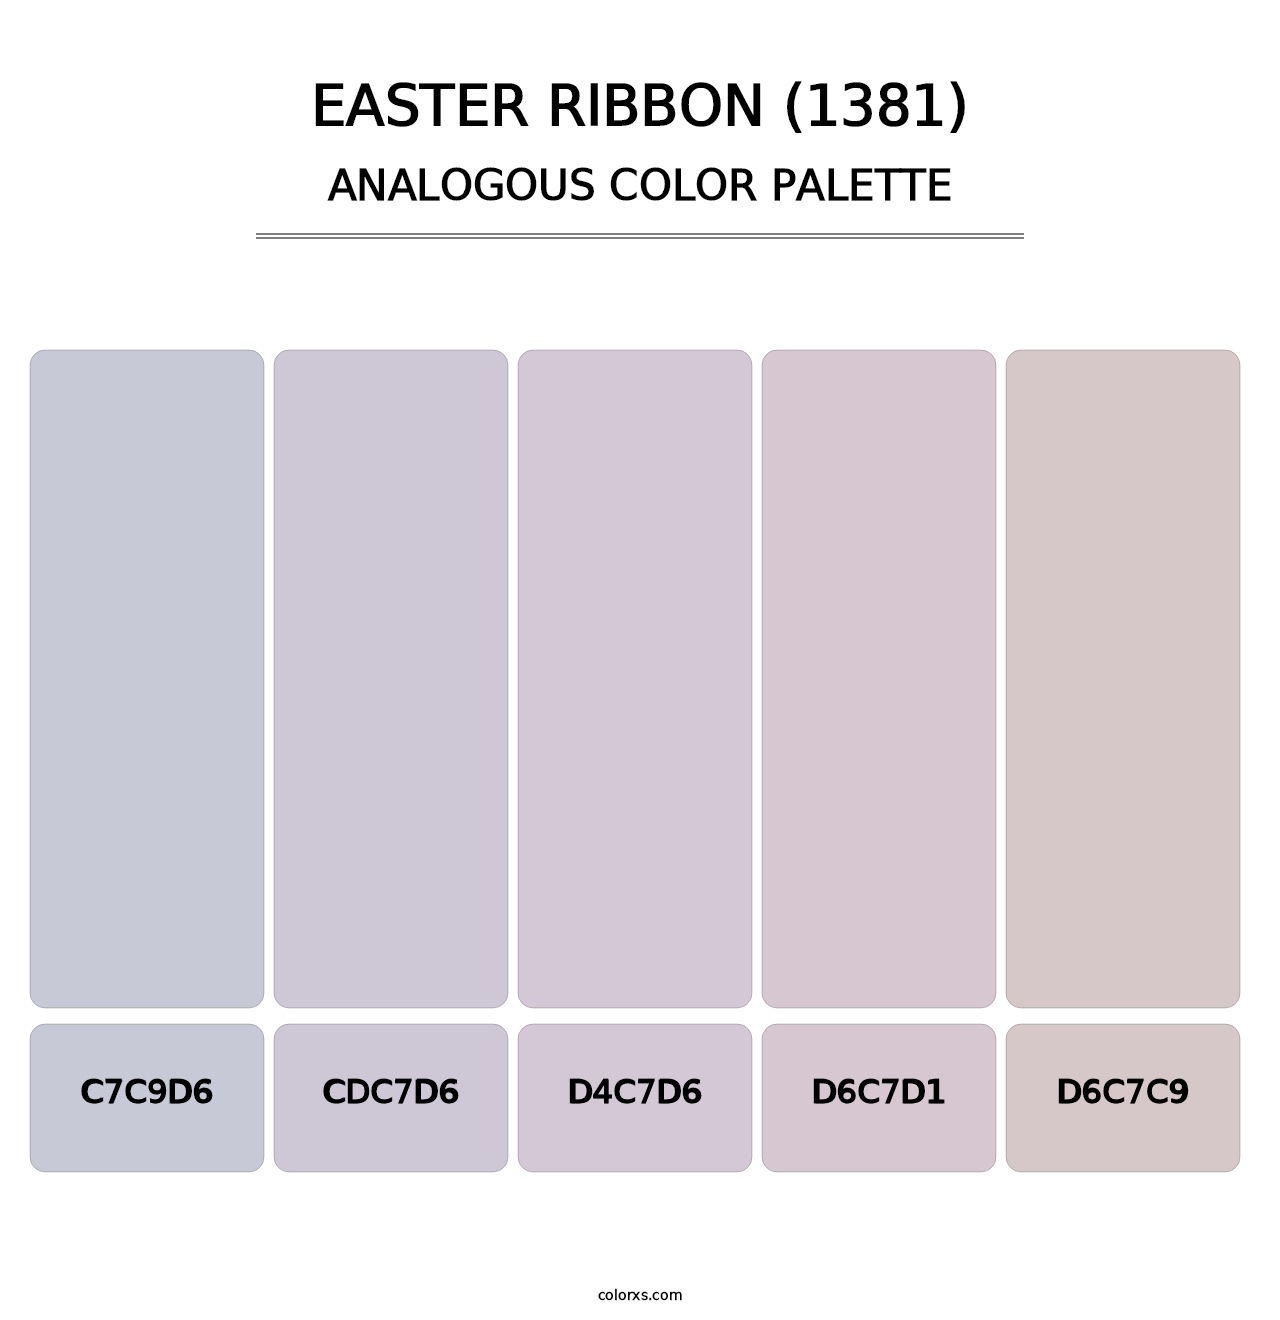 Easter Ribbon (1381) - Analogous Color Palette